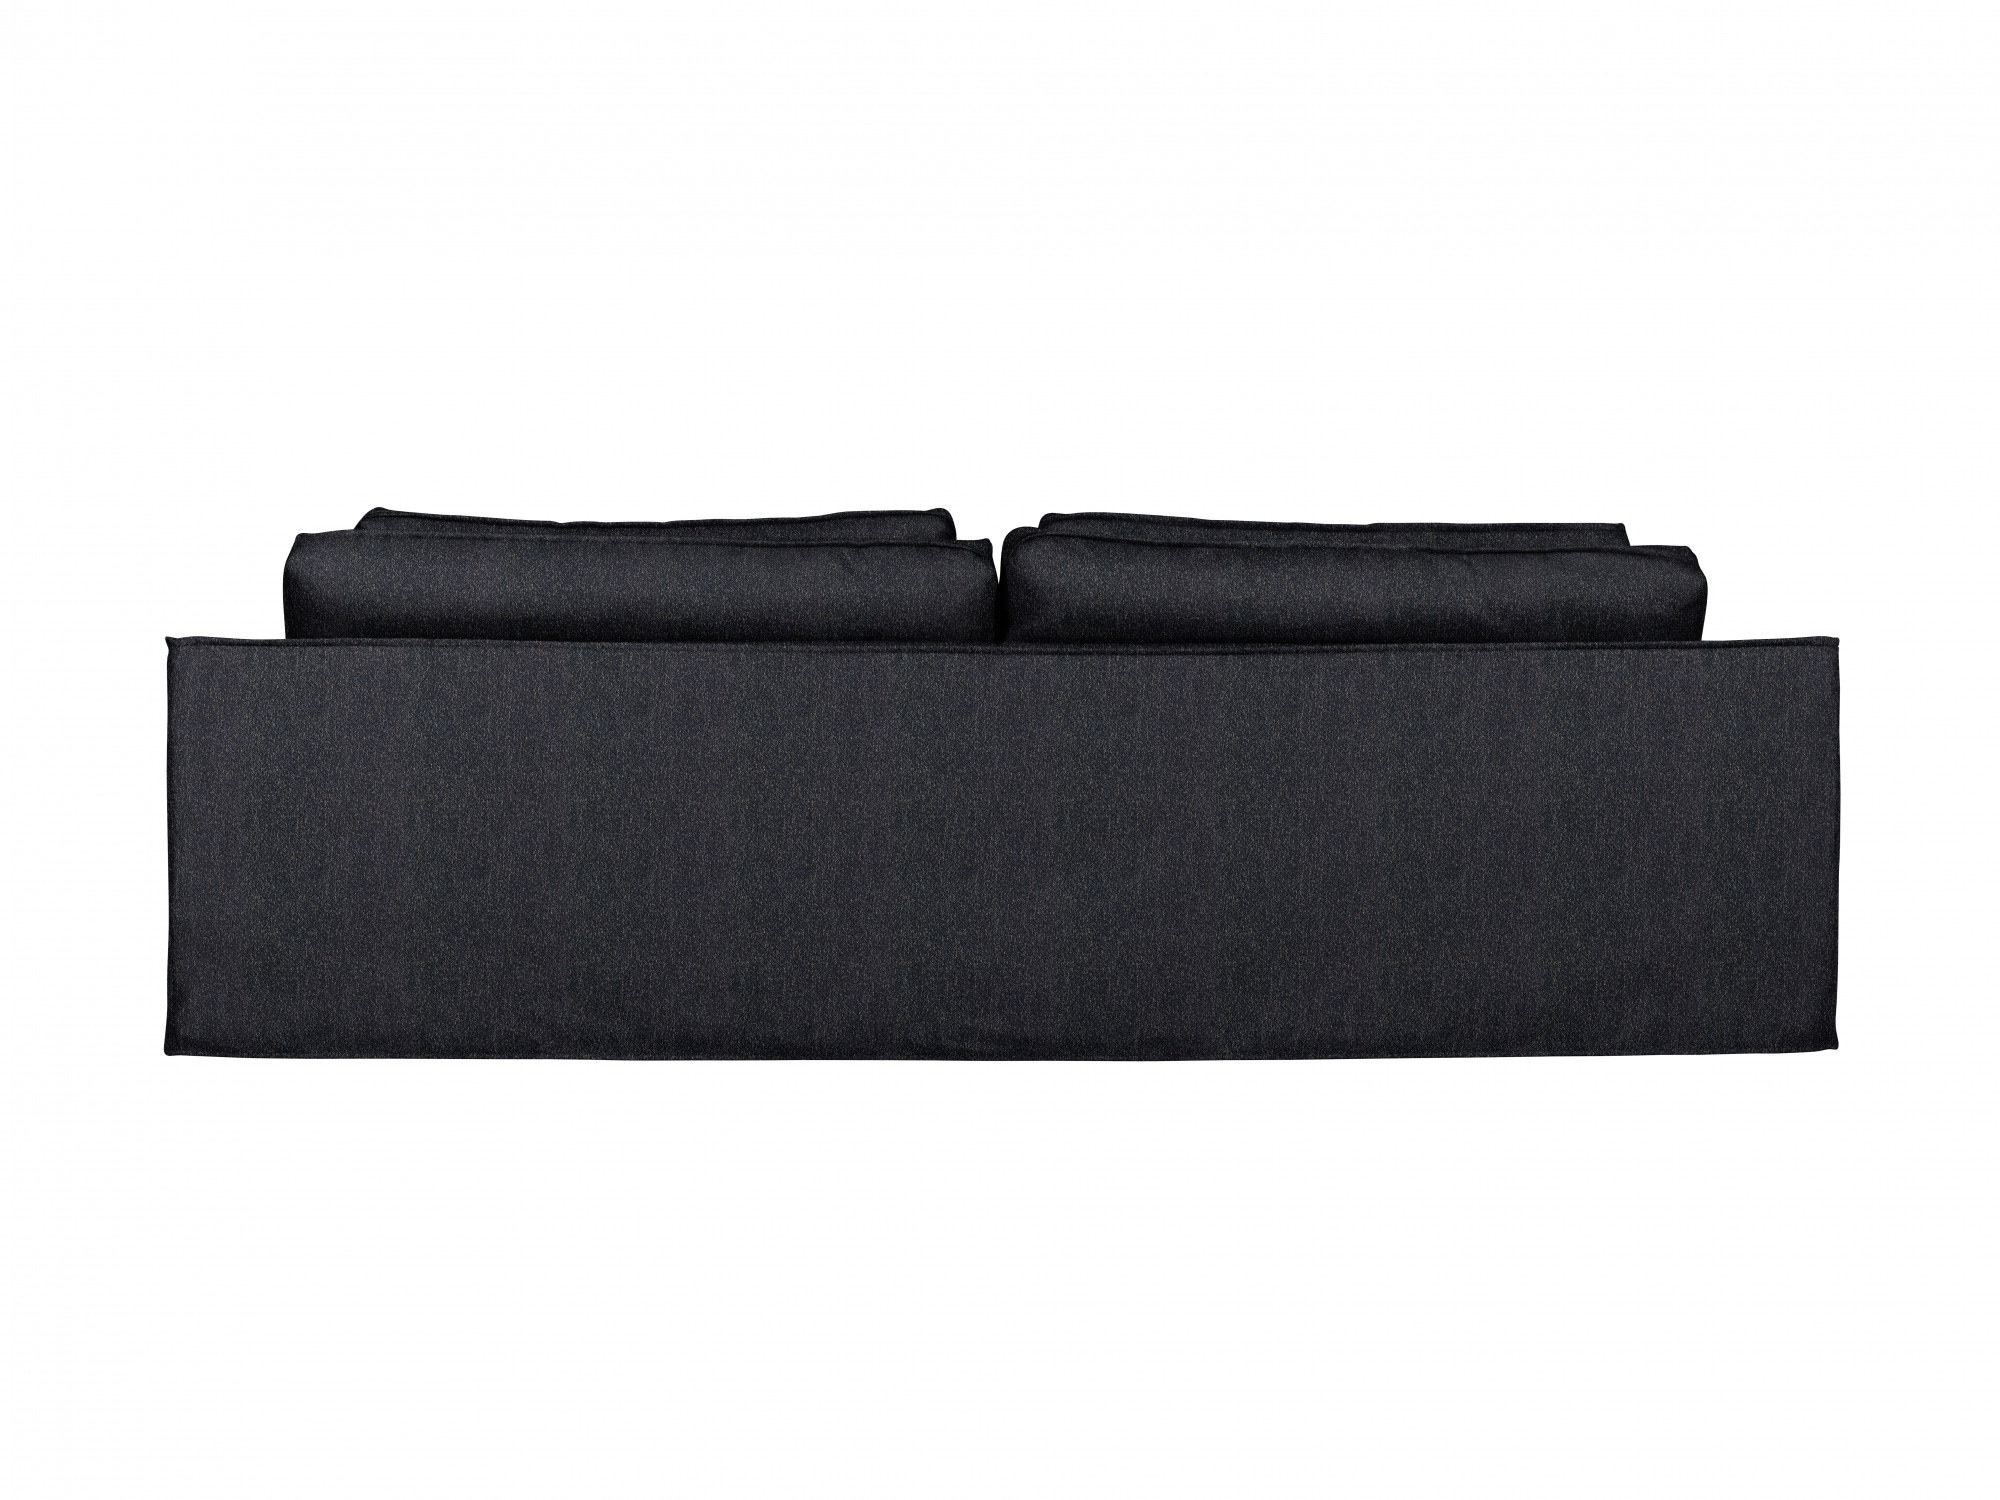 furninova Big-Sofa »Grande Double Day LC«, abnehmbarer Hussenbezug, im skandinavischen Design, Breite 266 cm